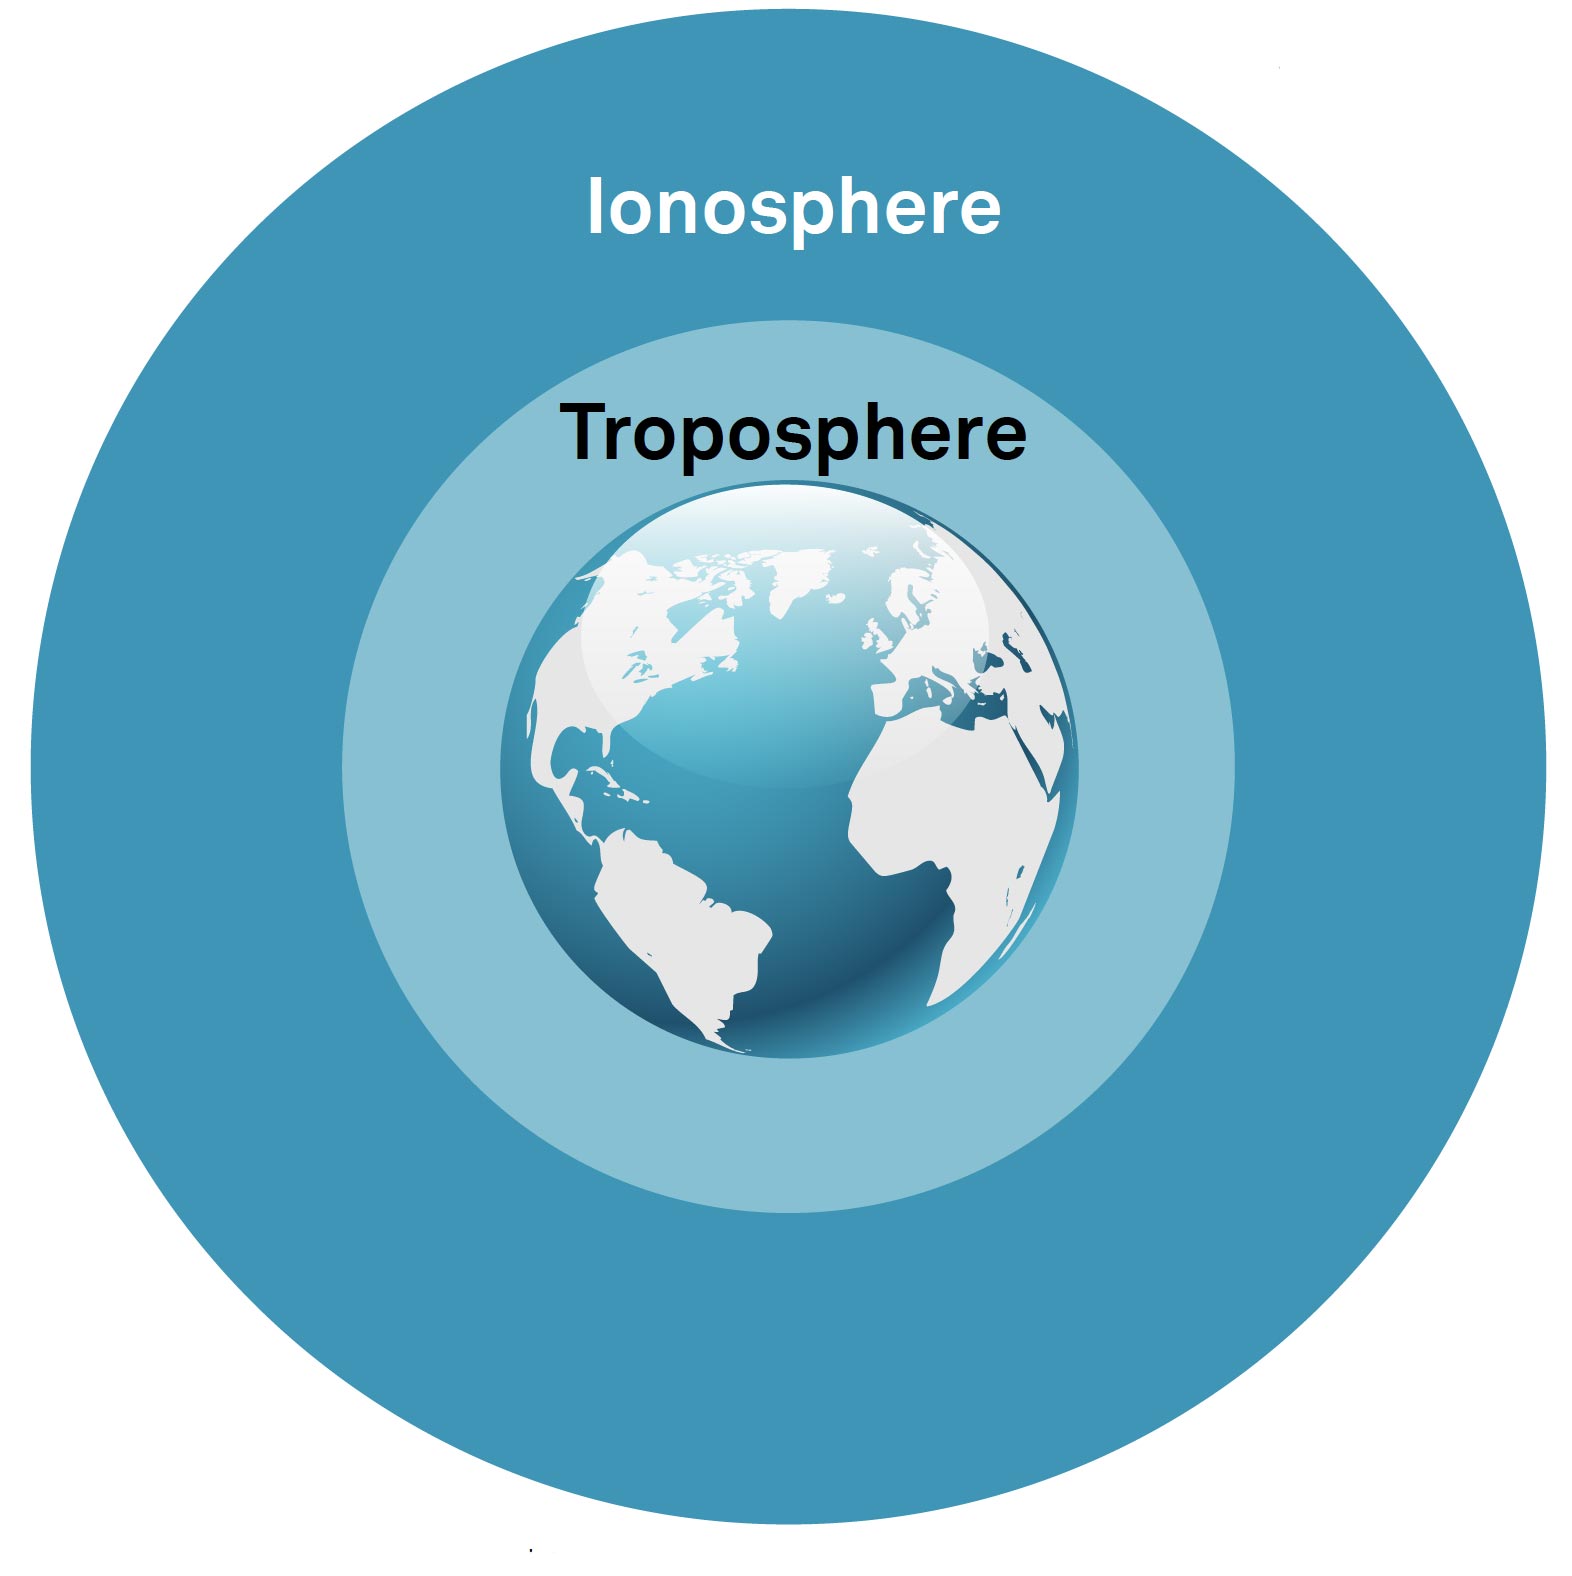 Figure 38 Ionosphere and troposphere